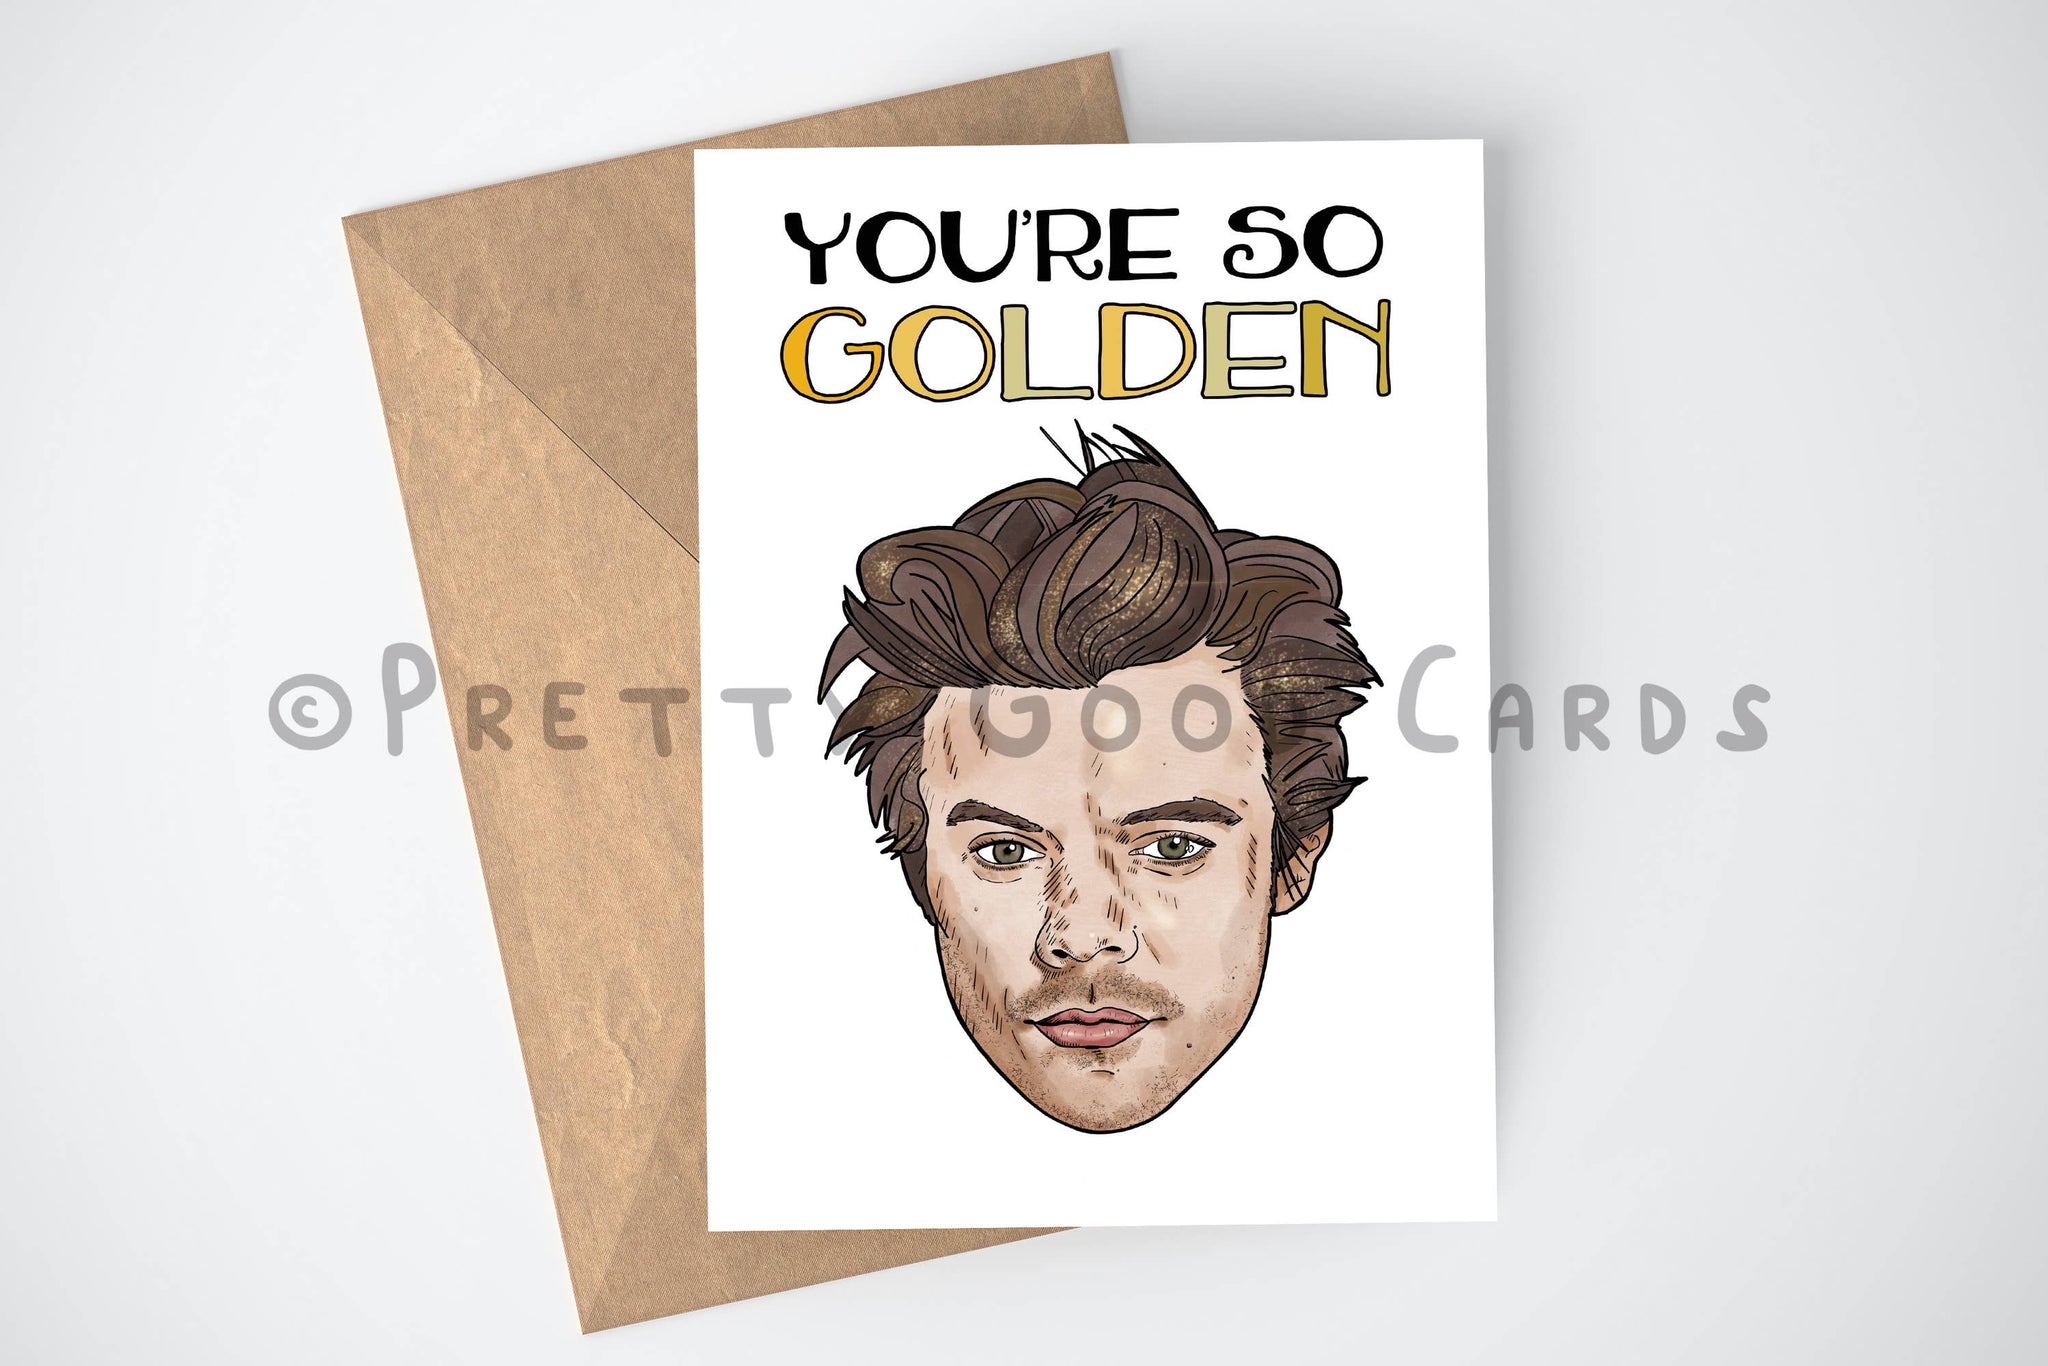 Pretty Good Cards - You're So Golden Card